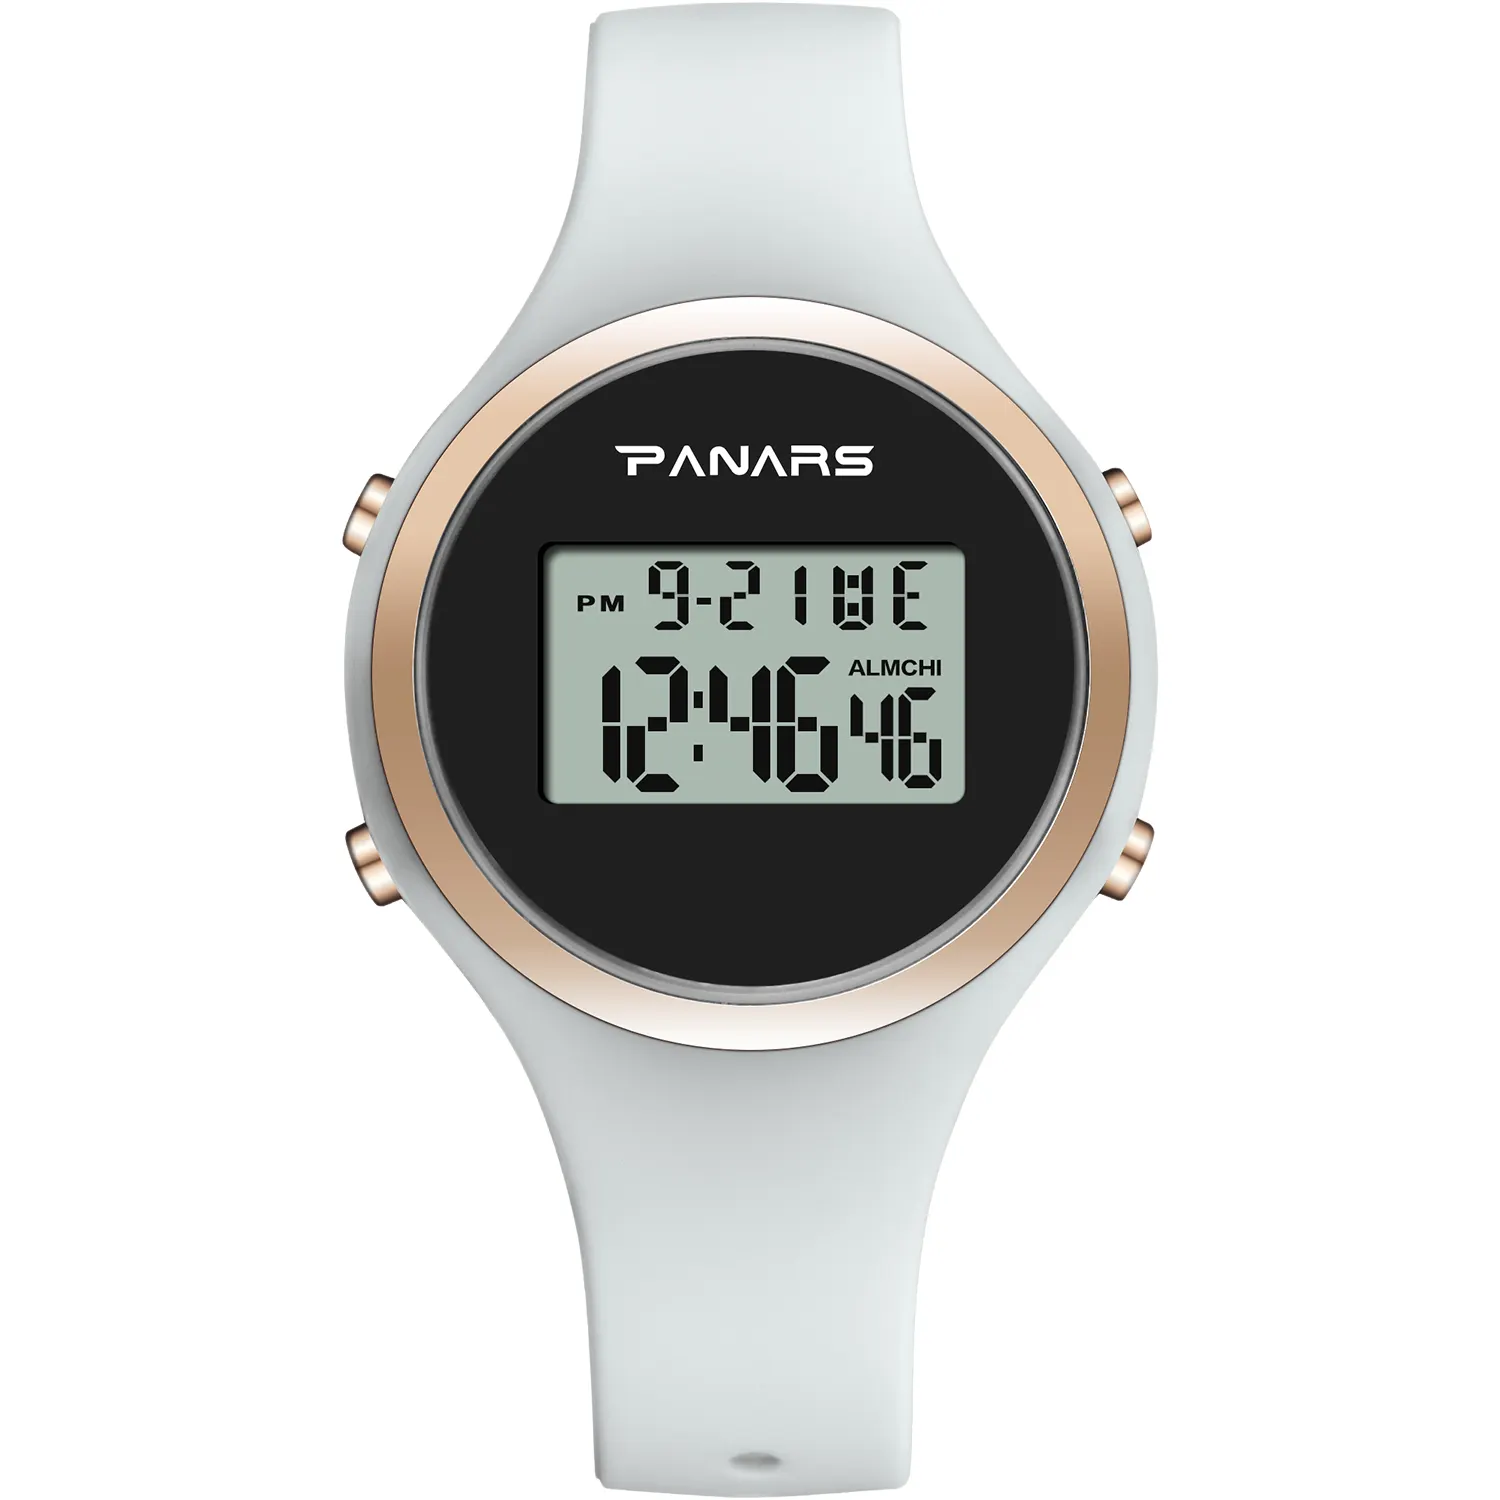 PANARS 8122 beautiful white girls digital watch nice Rubber band waterproof date display leisure sports wrist watch